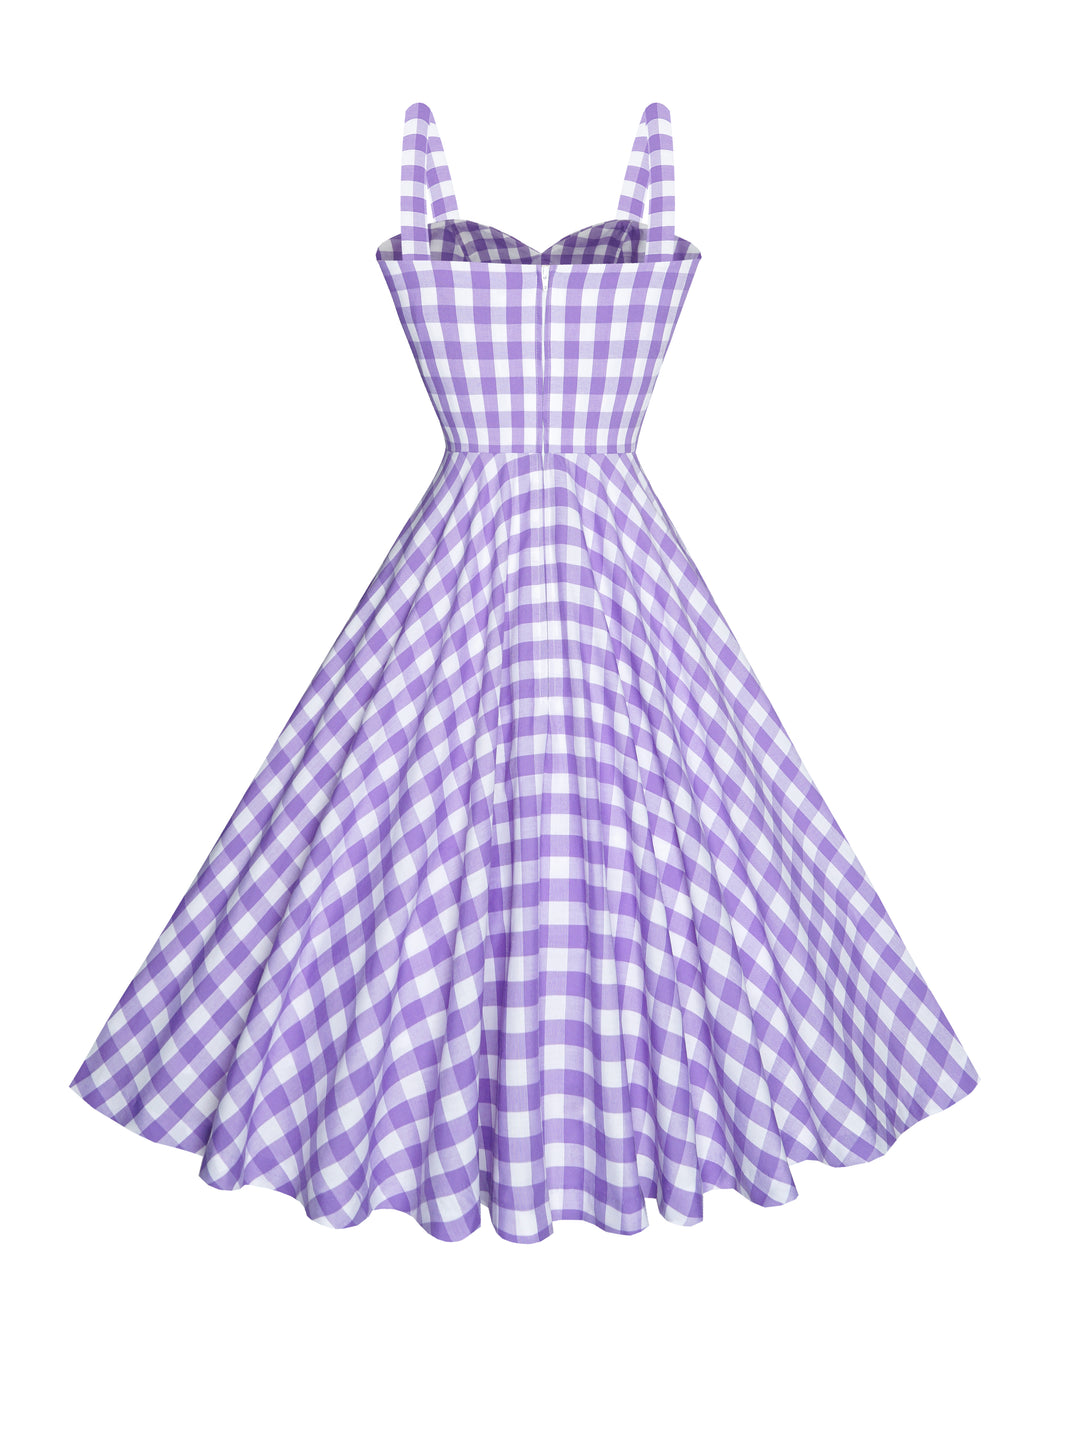 MTO - Catalina Dress Lavender Purple Gingham - Large Checks